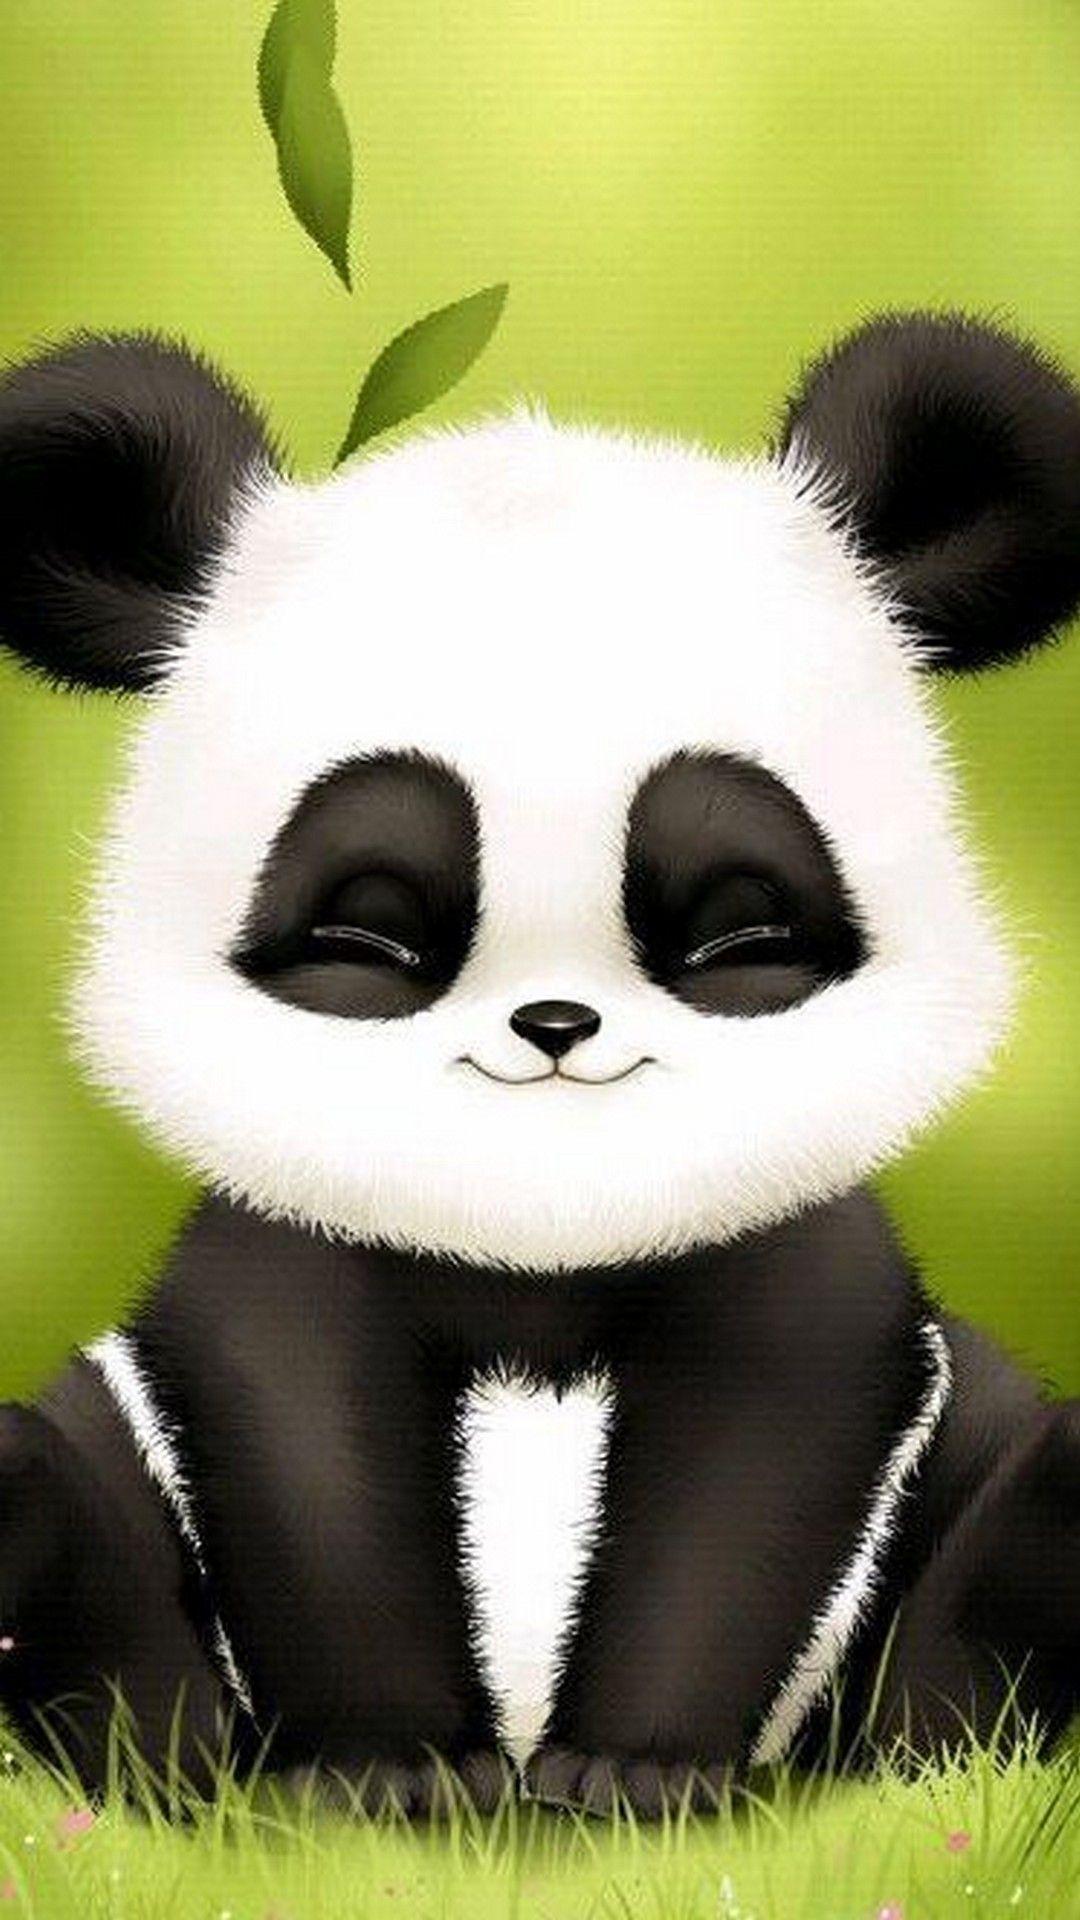 Cute Panda Wallpaper For Phone. Best HD Wallpaper. Cute panda wallpaper, Panda background, Panda art